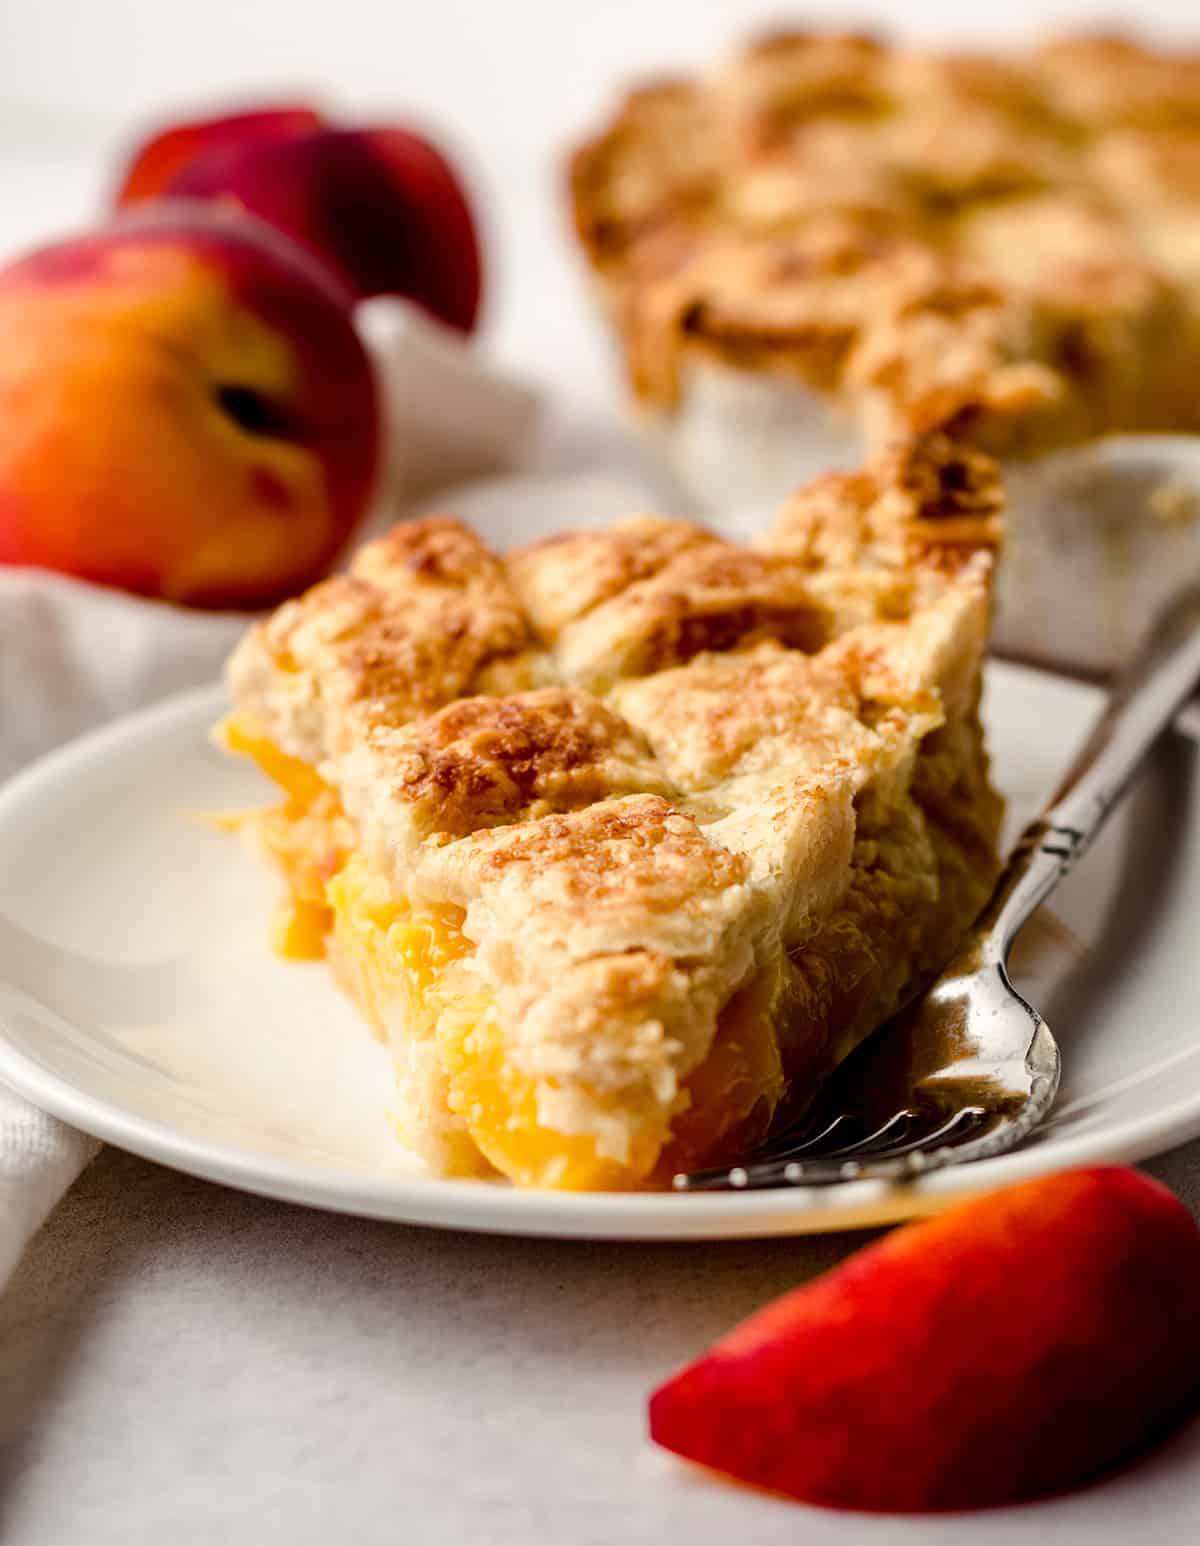 A slice of fresh peach pie with a lattice crust.